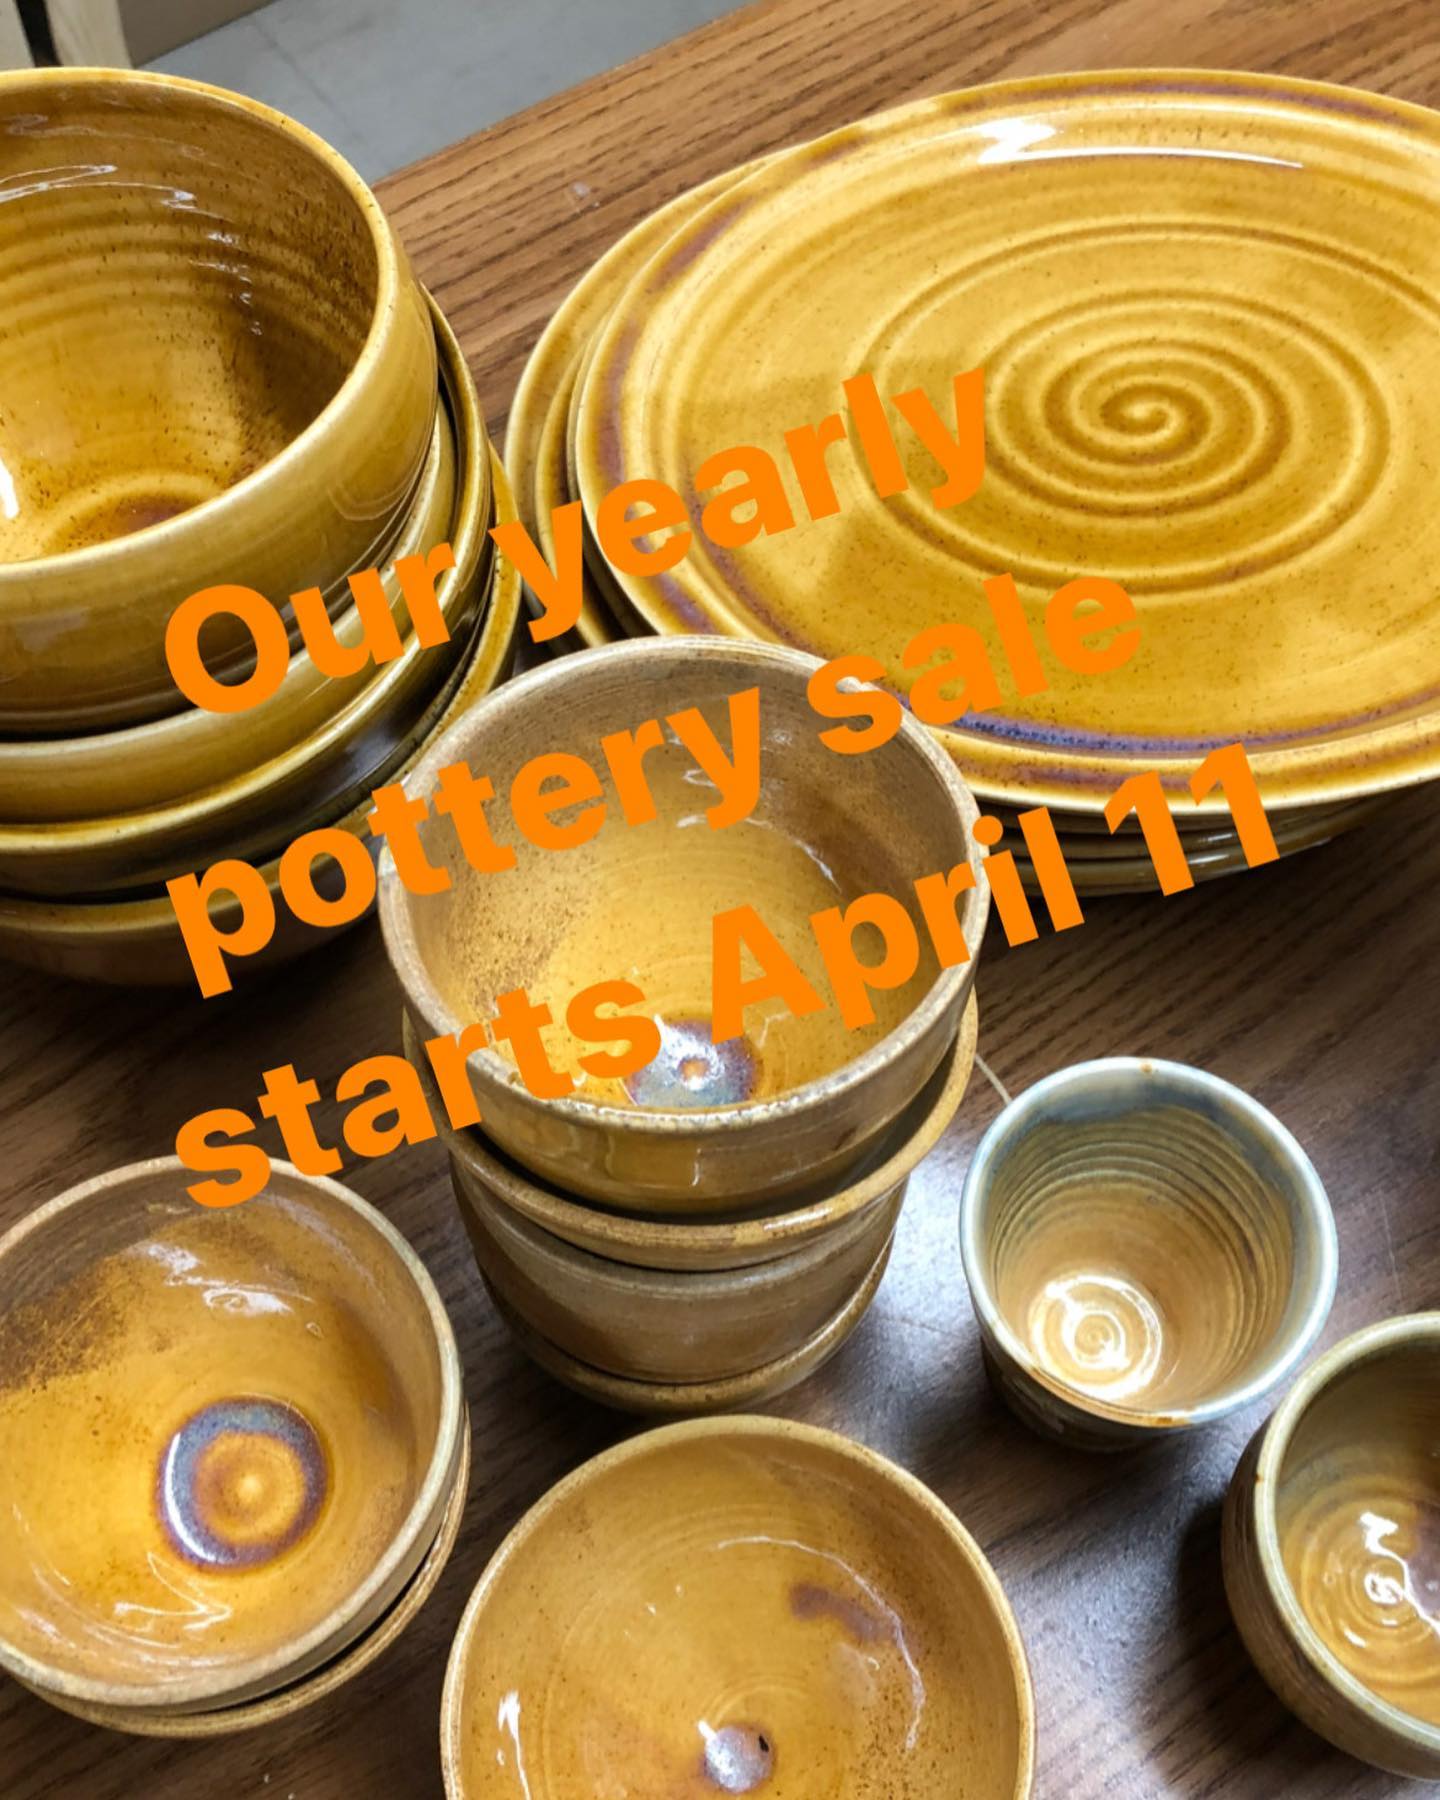 Pottery Sale - April 2023 - Muckabout